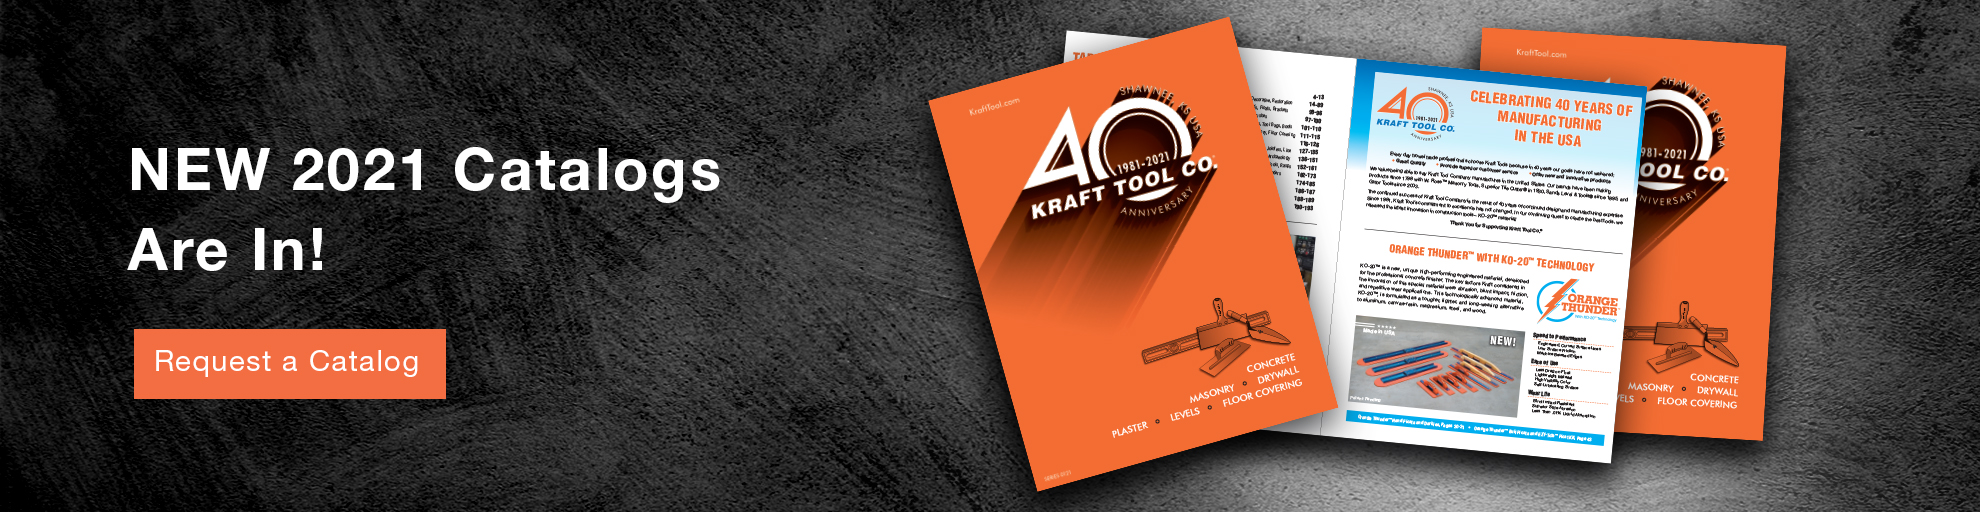 2021 Kraft Tool Catalog graphic celebrating 40 years